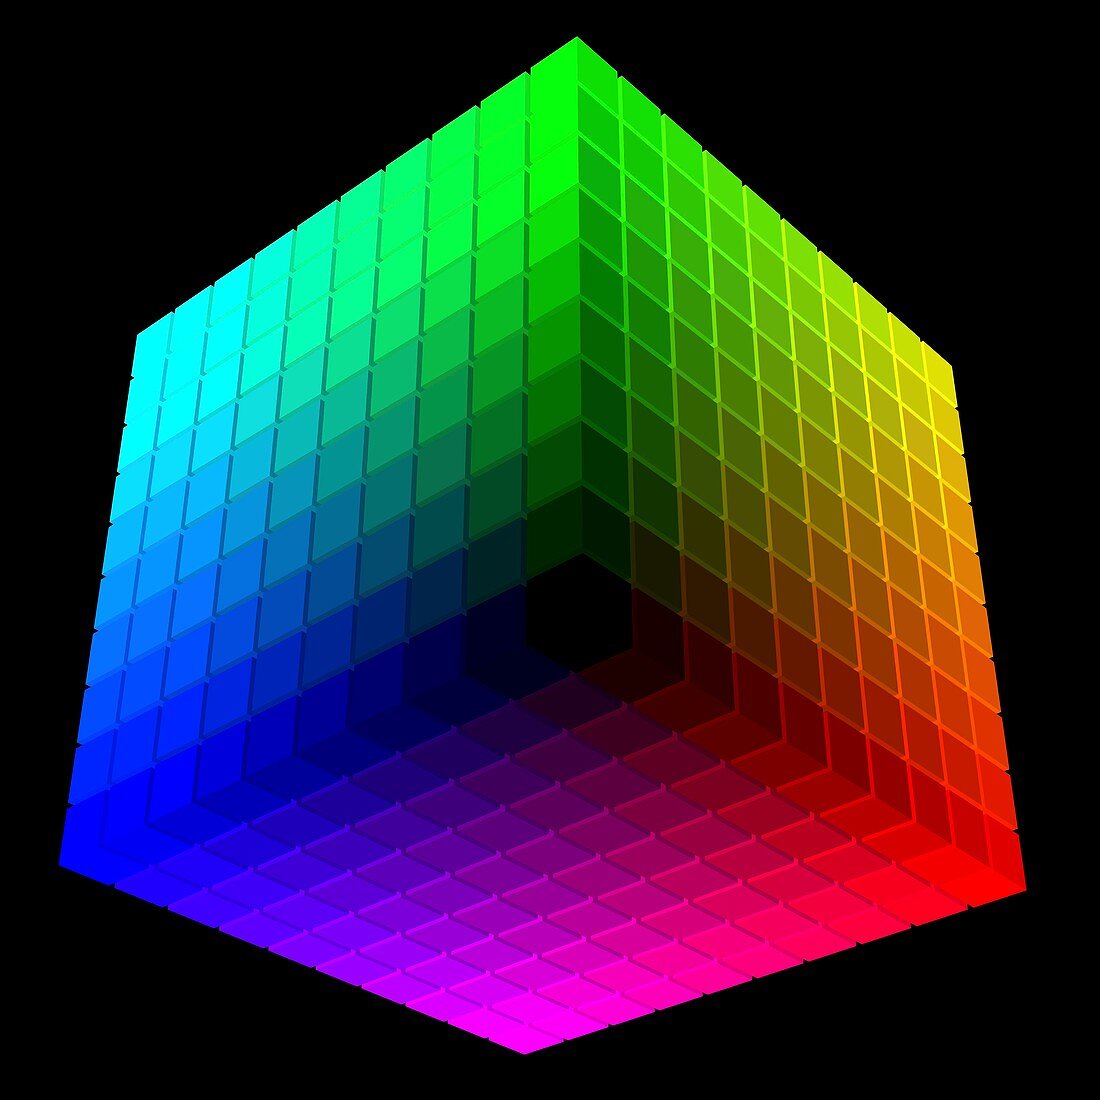 Hickethier colour-cube,computer artwork